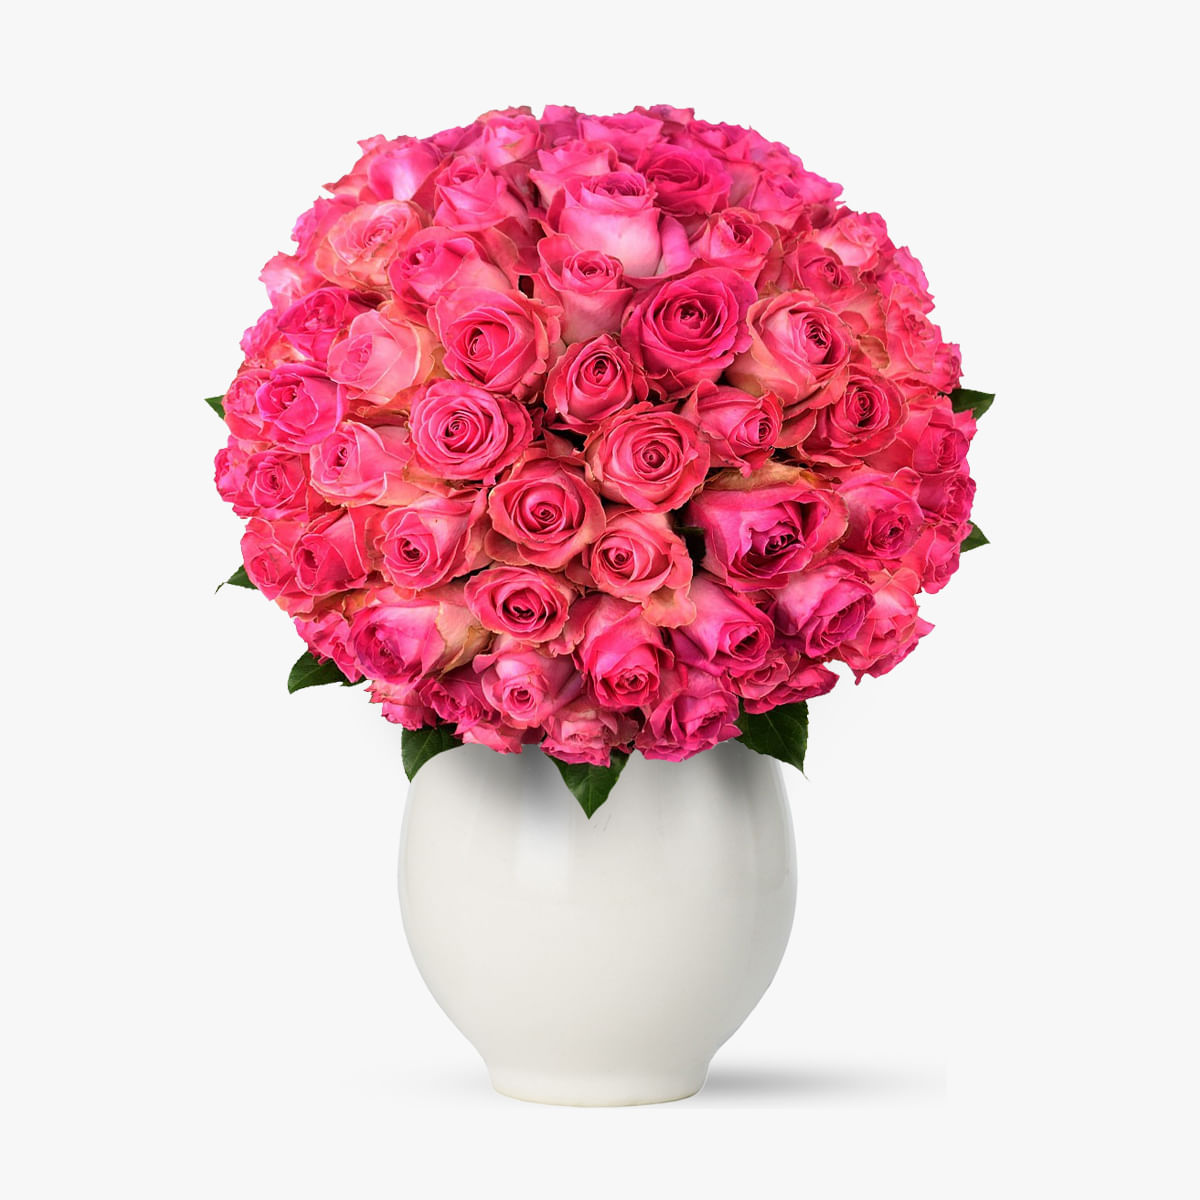 Buchet de 75 trandafiri roz – Standard Buchet imagine 2022